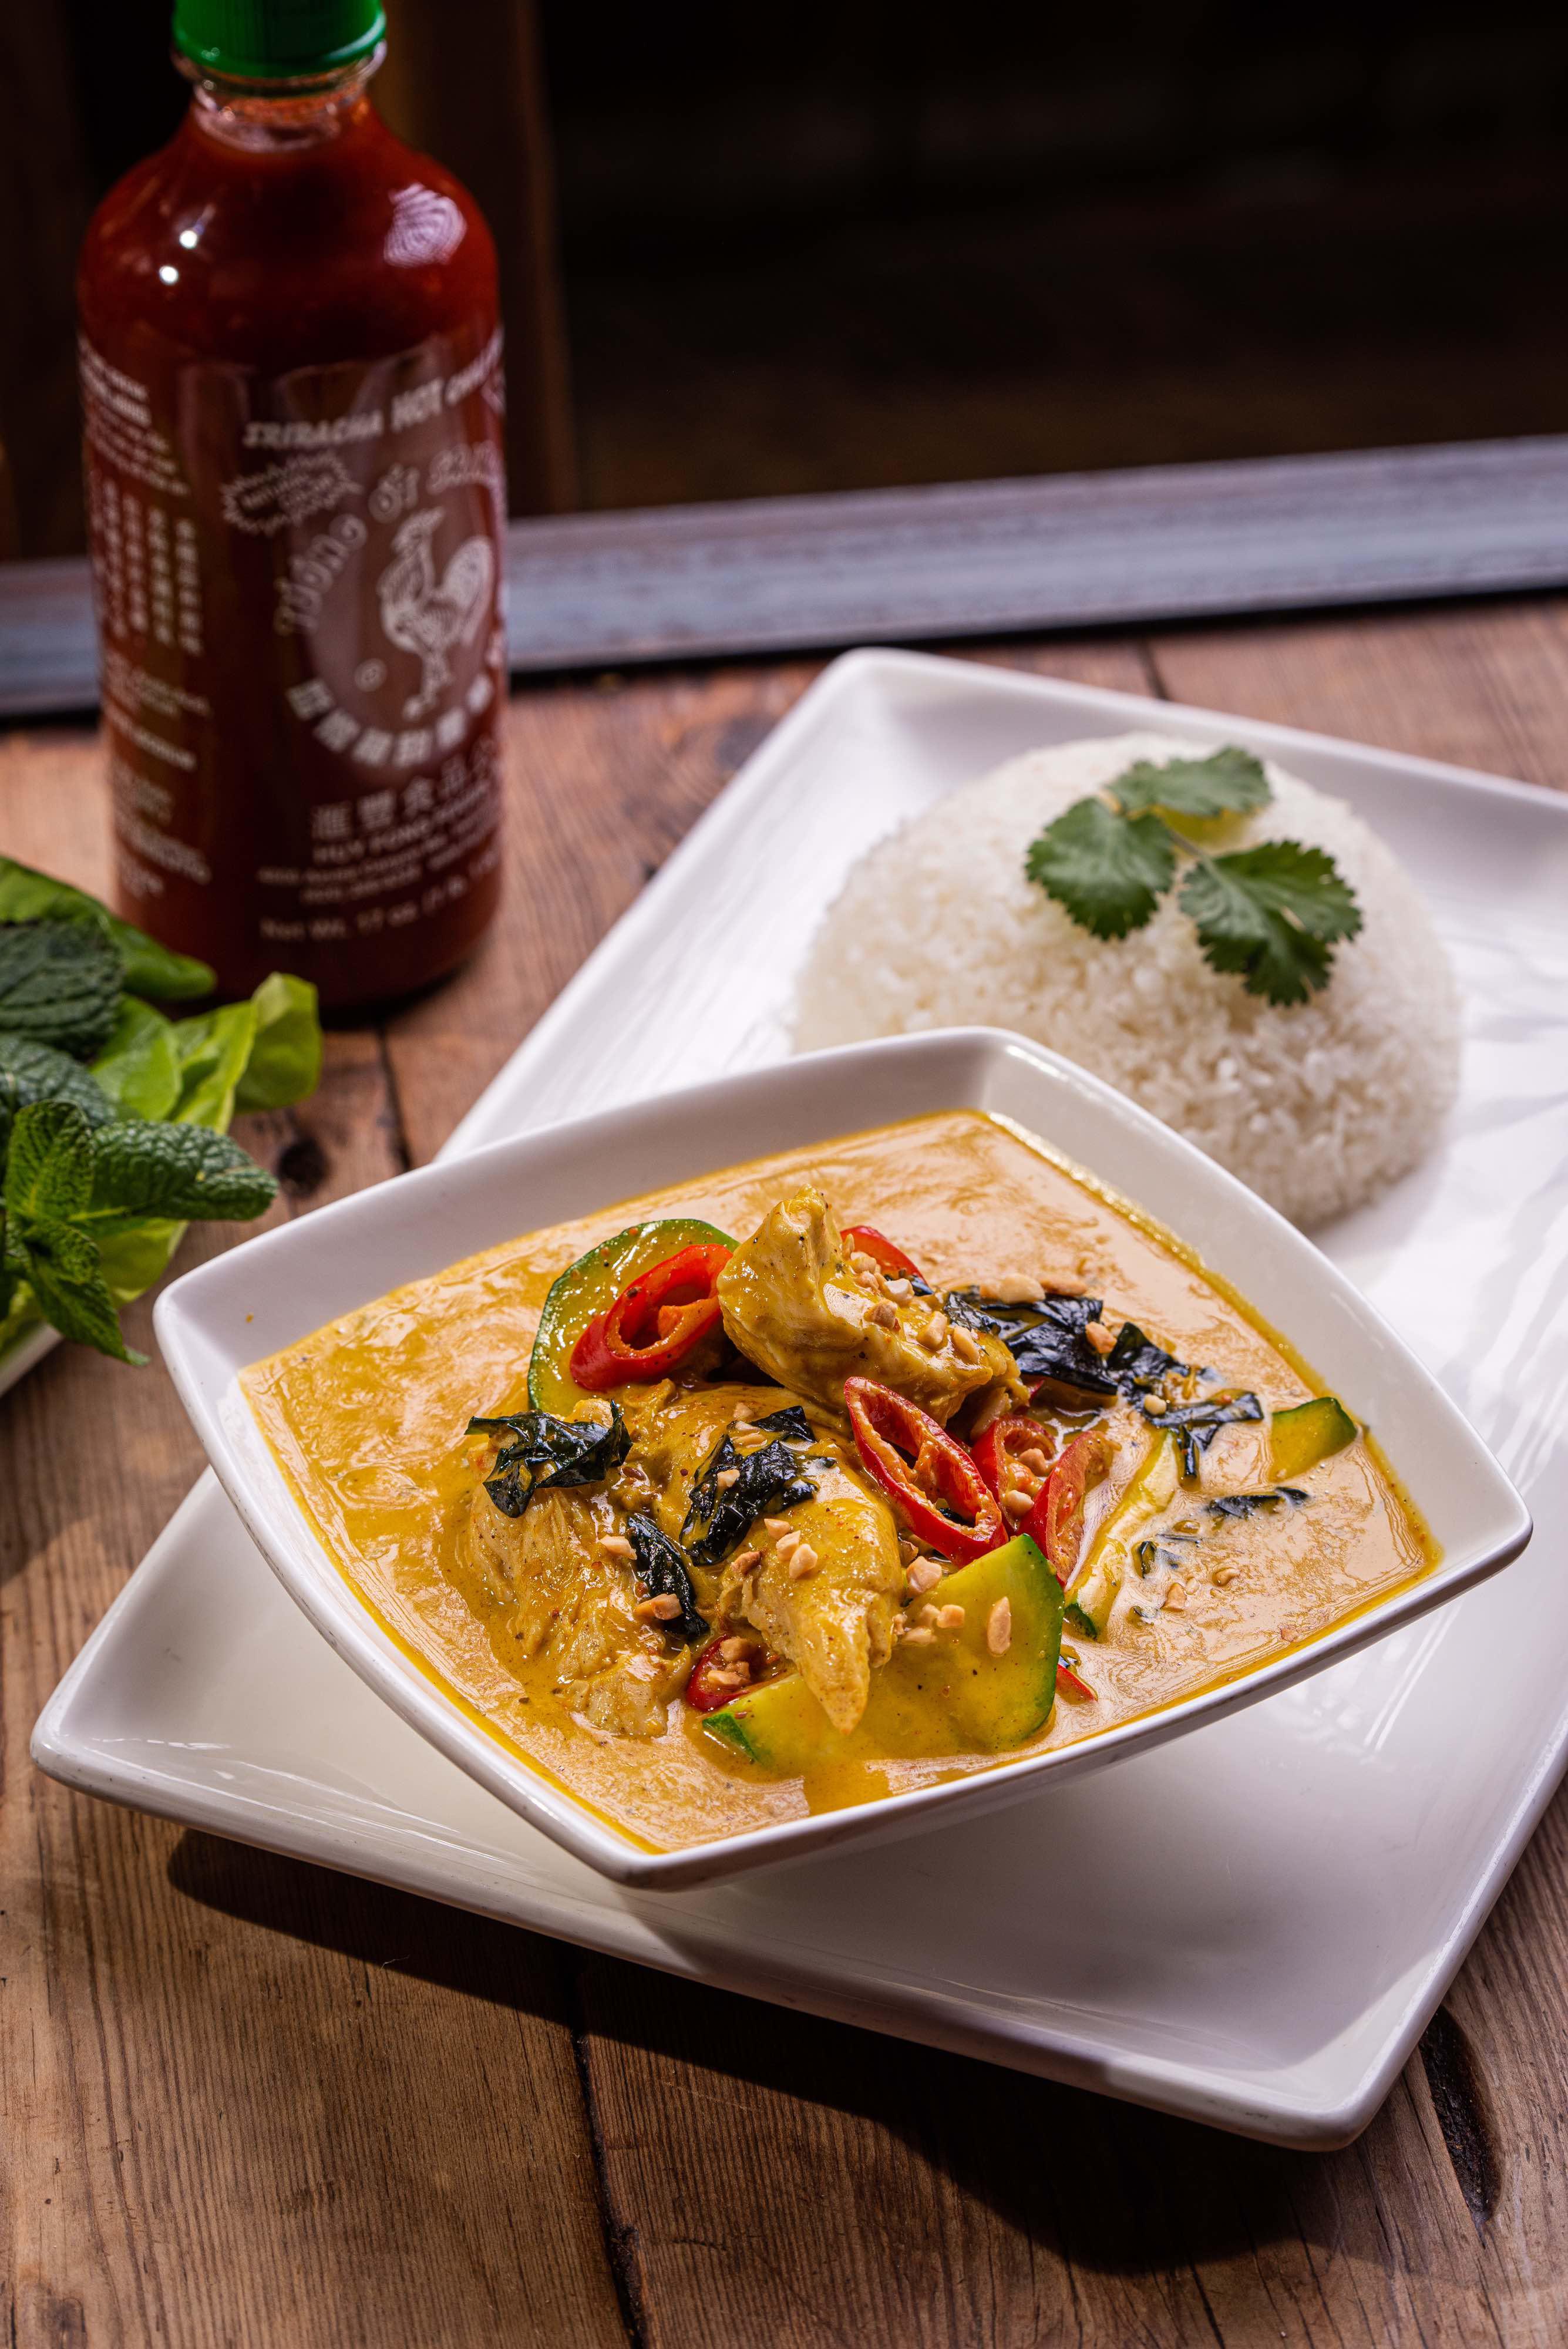 Fresh, Gluten-free, healthy Vietnamese Pho noodle soup
Vietnamese curry Pho Milton Keynes 01908 880251